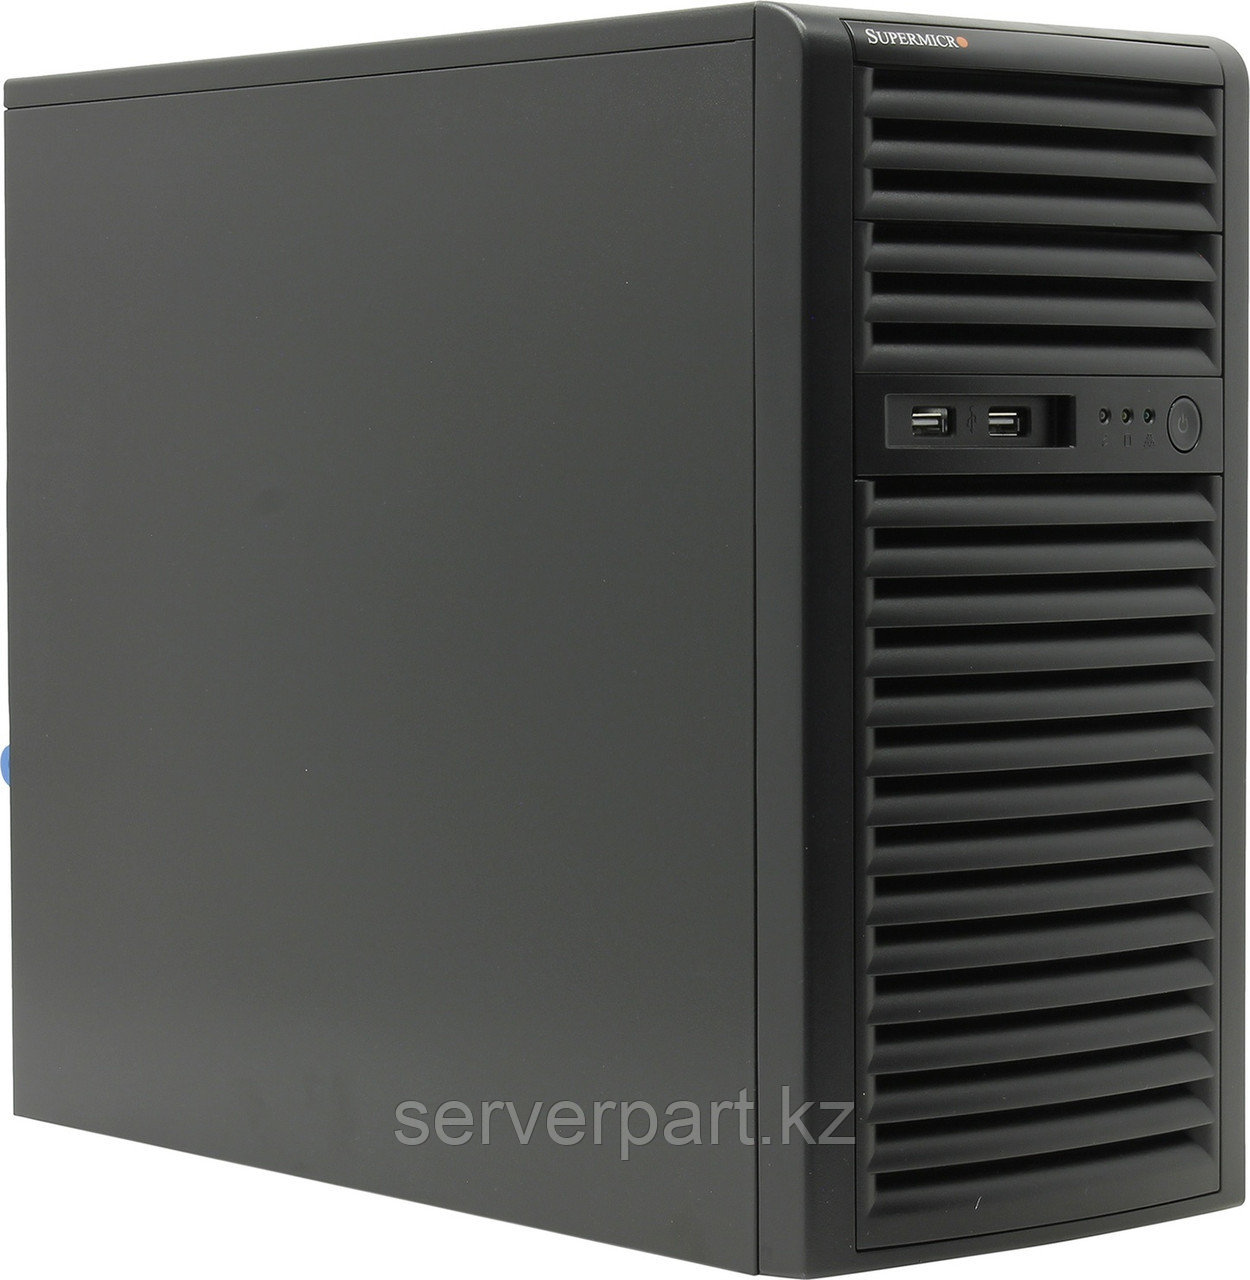 Сервер Supermicro SYS-5039C Tower 4LFF/4-core intel xeon E2124 3.3GHz/32GB EUDIMM/1x480GB SSD MU Hyb, фото 1